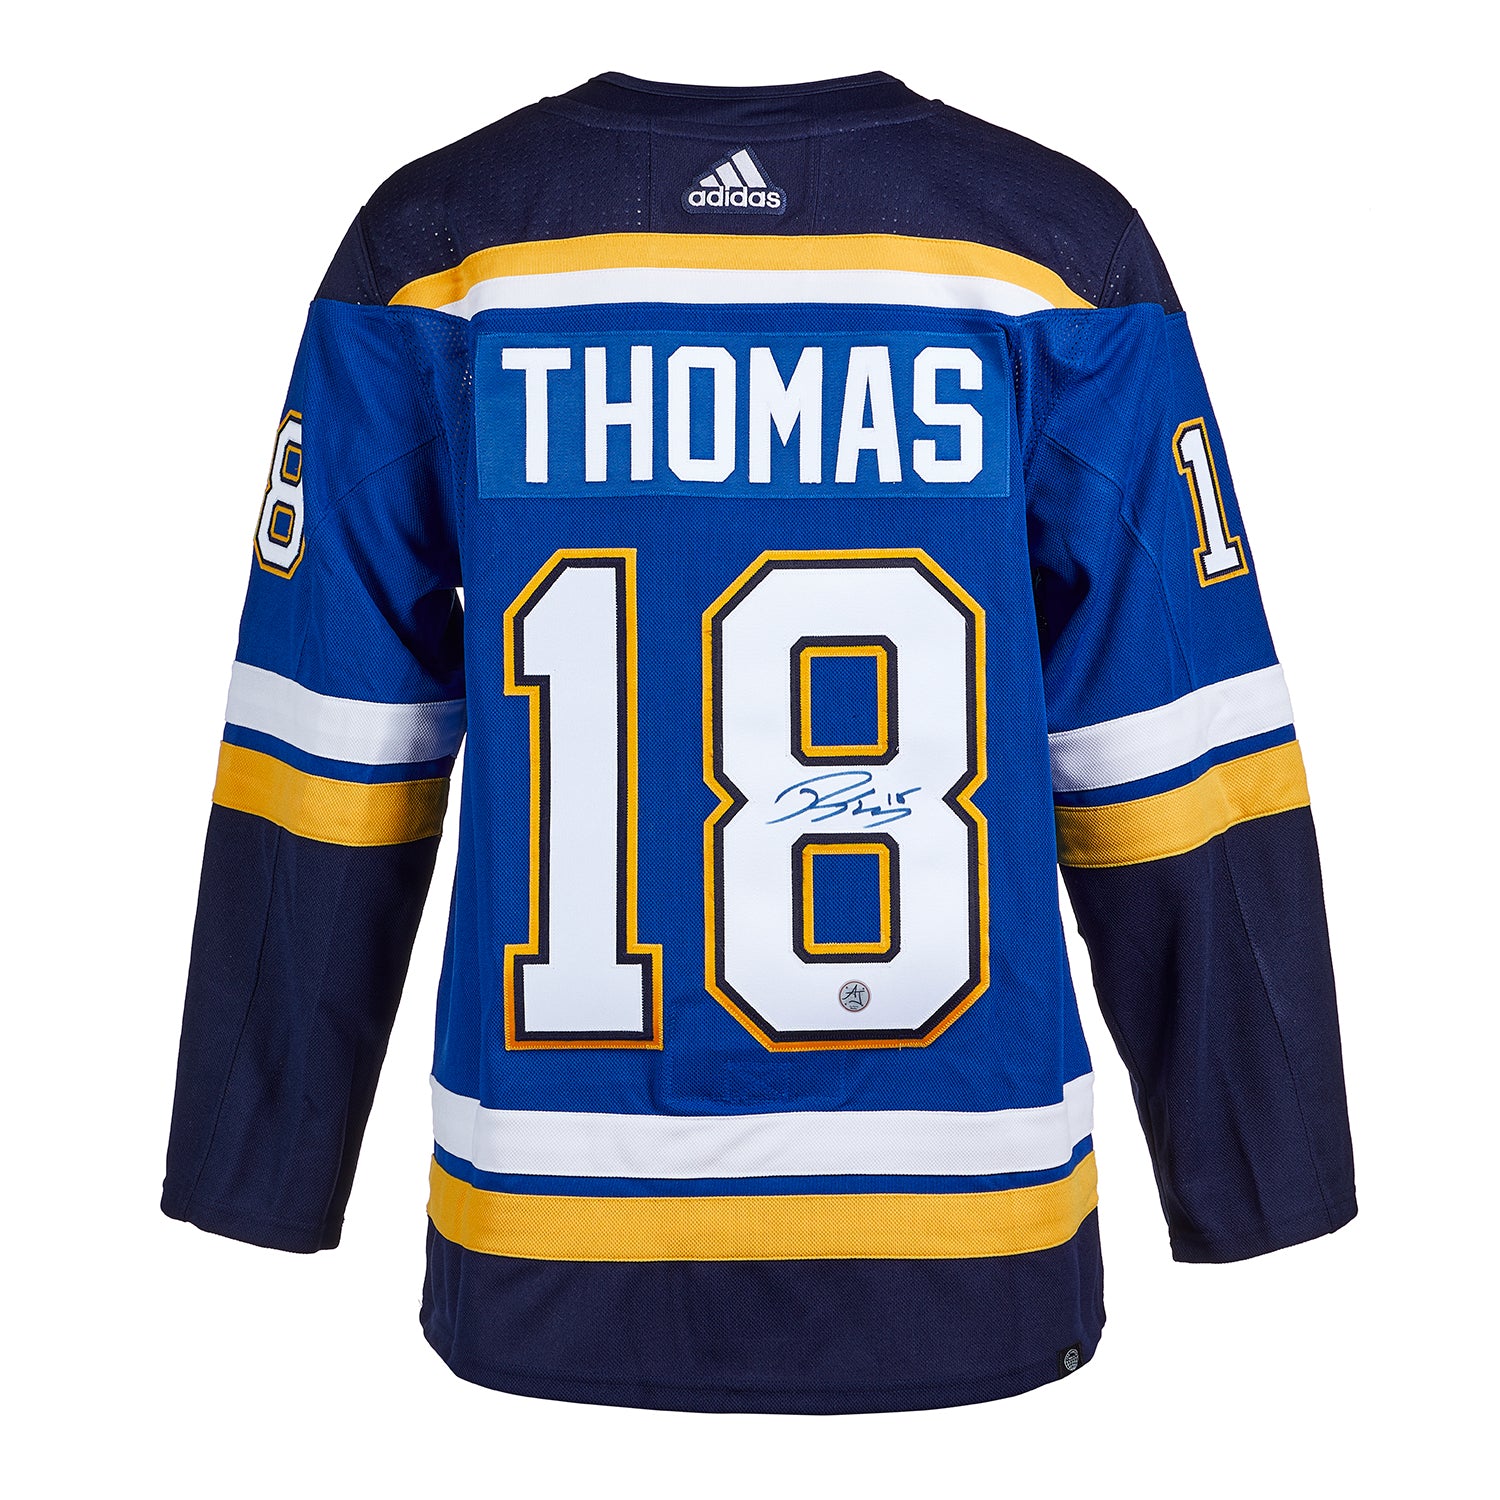 Robert Thomas Signed St Louis Blues Heritage Adidas Jersey 